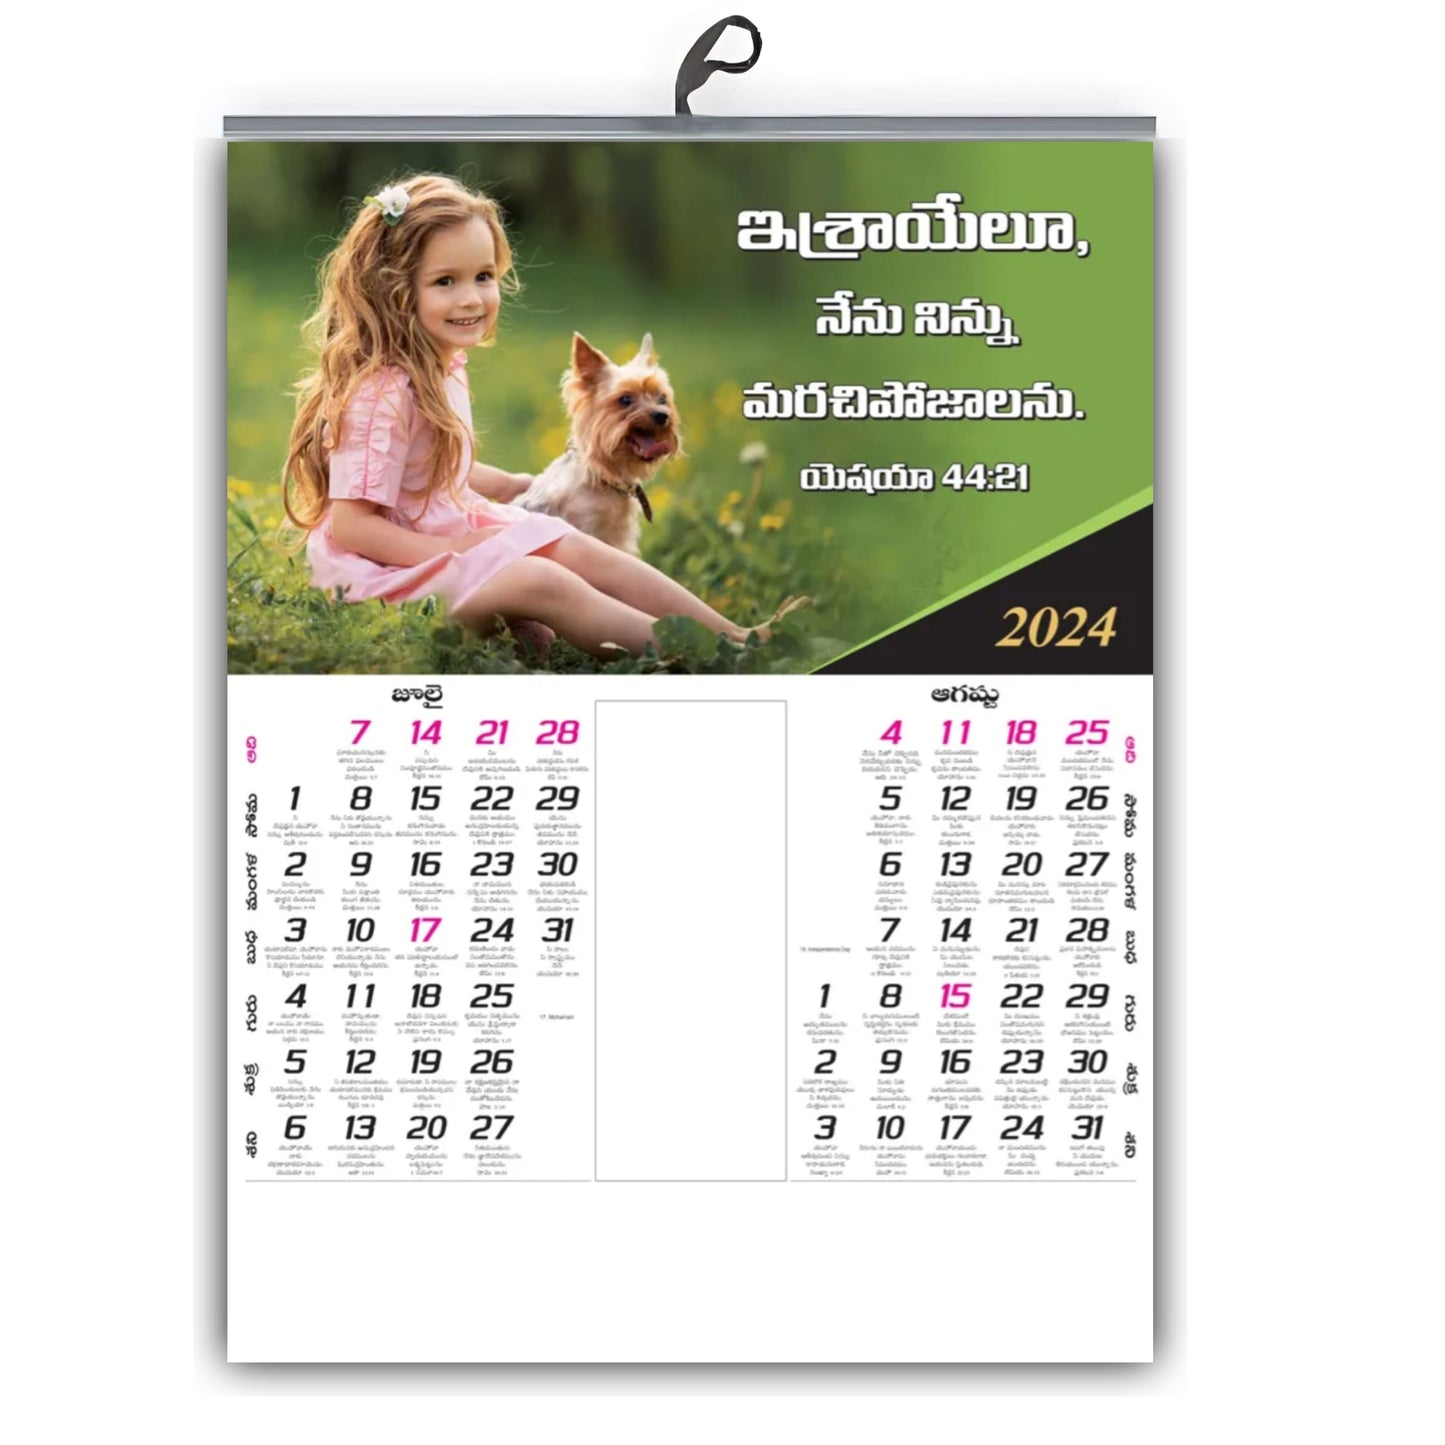 2024 Telugu Bible Verse Wall Calendar - Beautiful Flowers, Bible Promise Words, with Flower & Baby Design